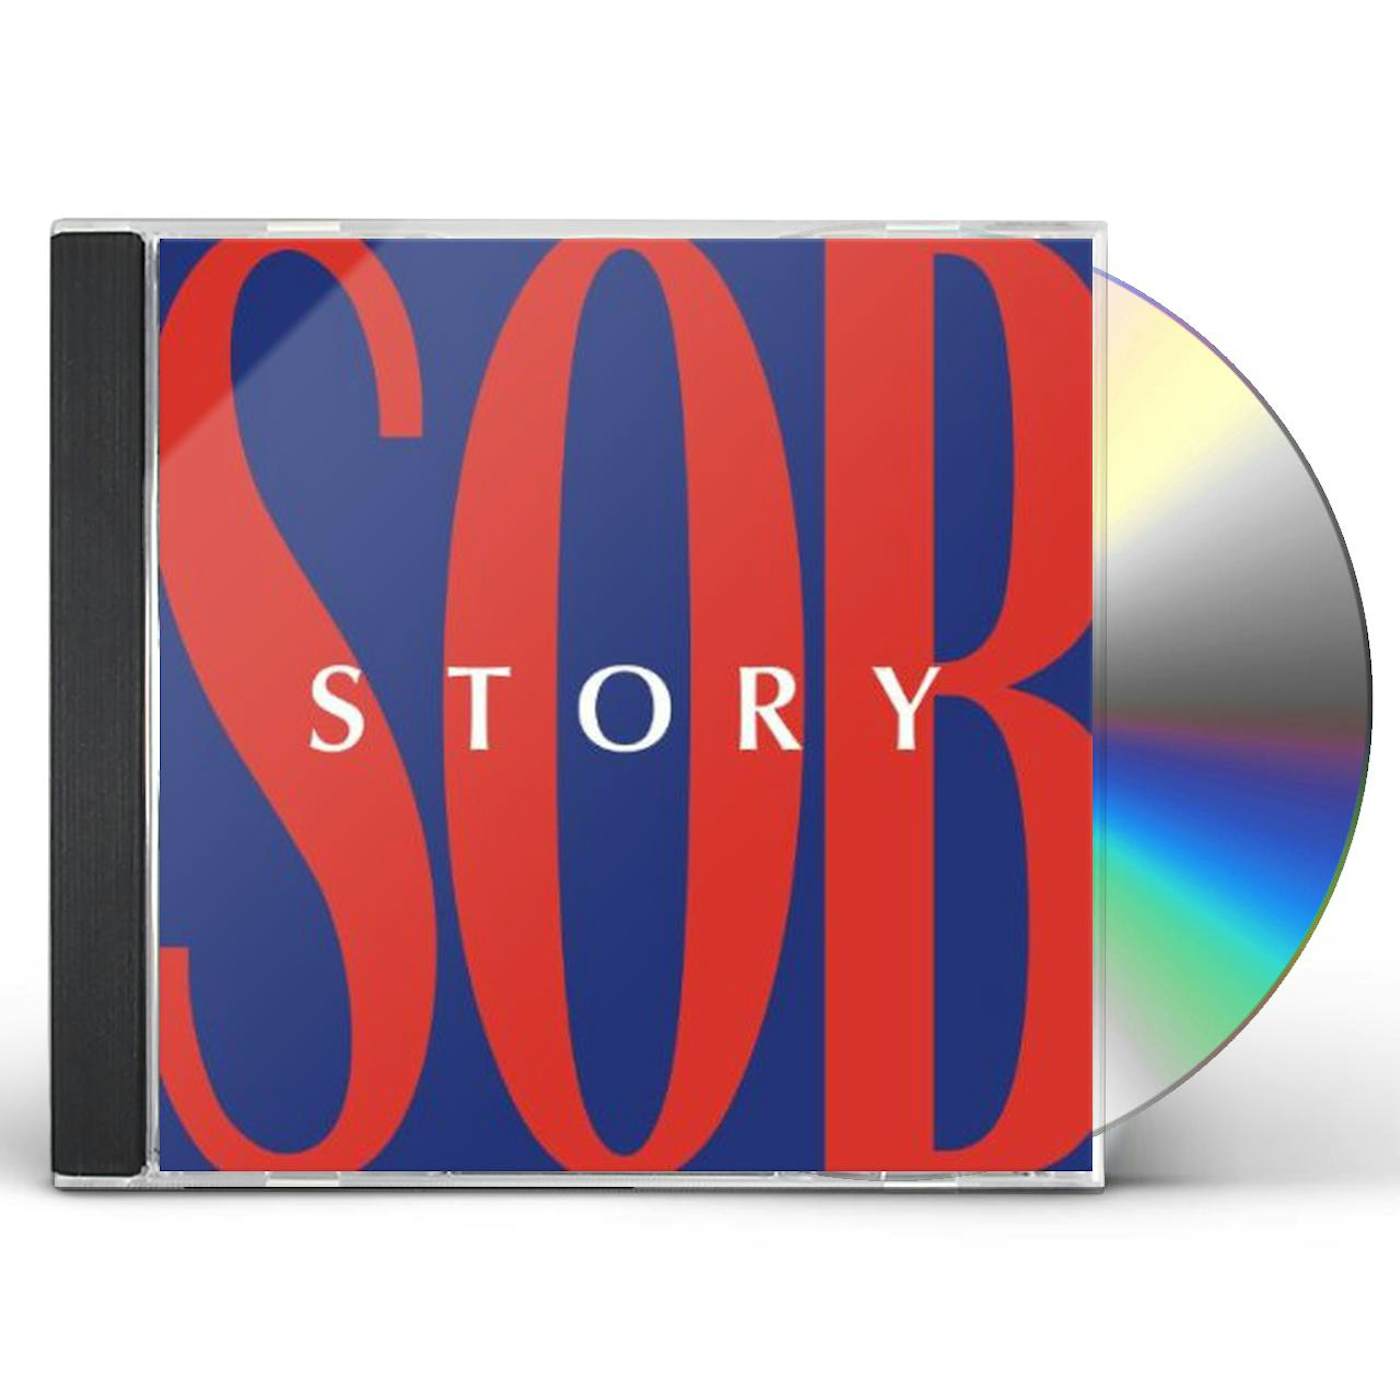 Spectrals SOB STORY CD